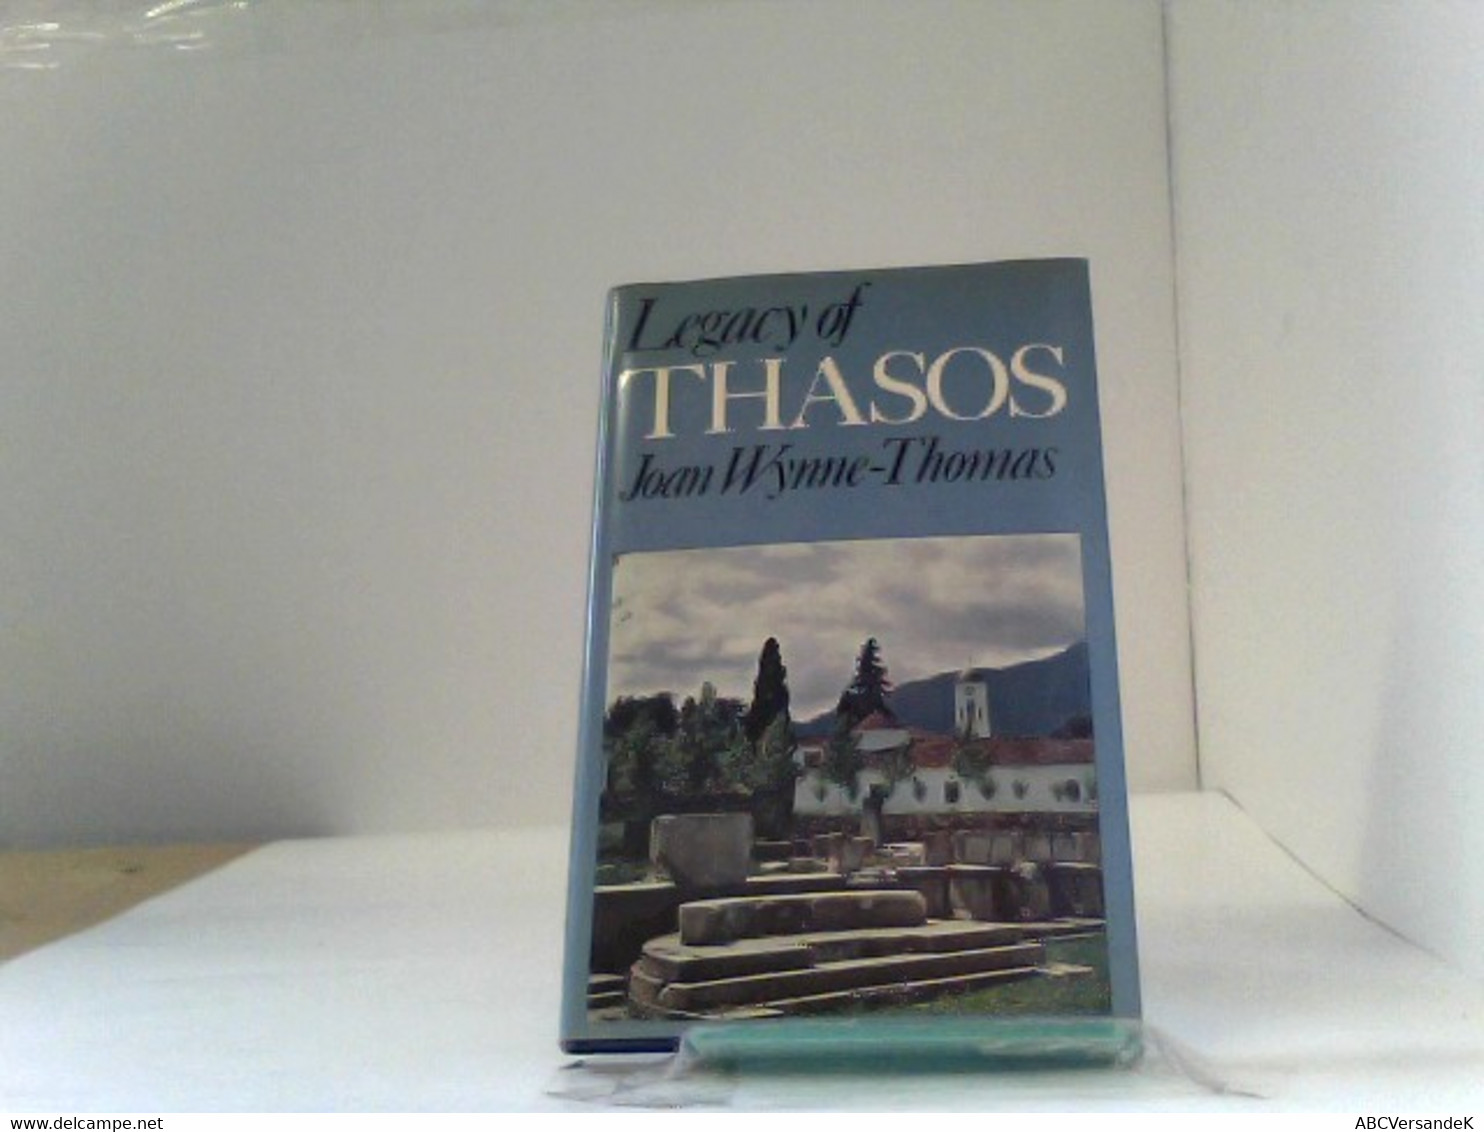 Legacy Of Thasos - Archeology